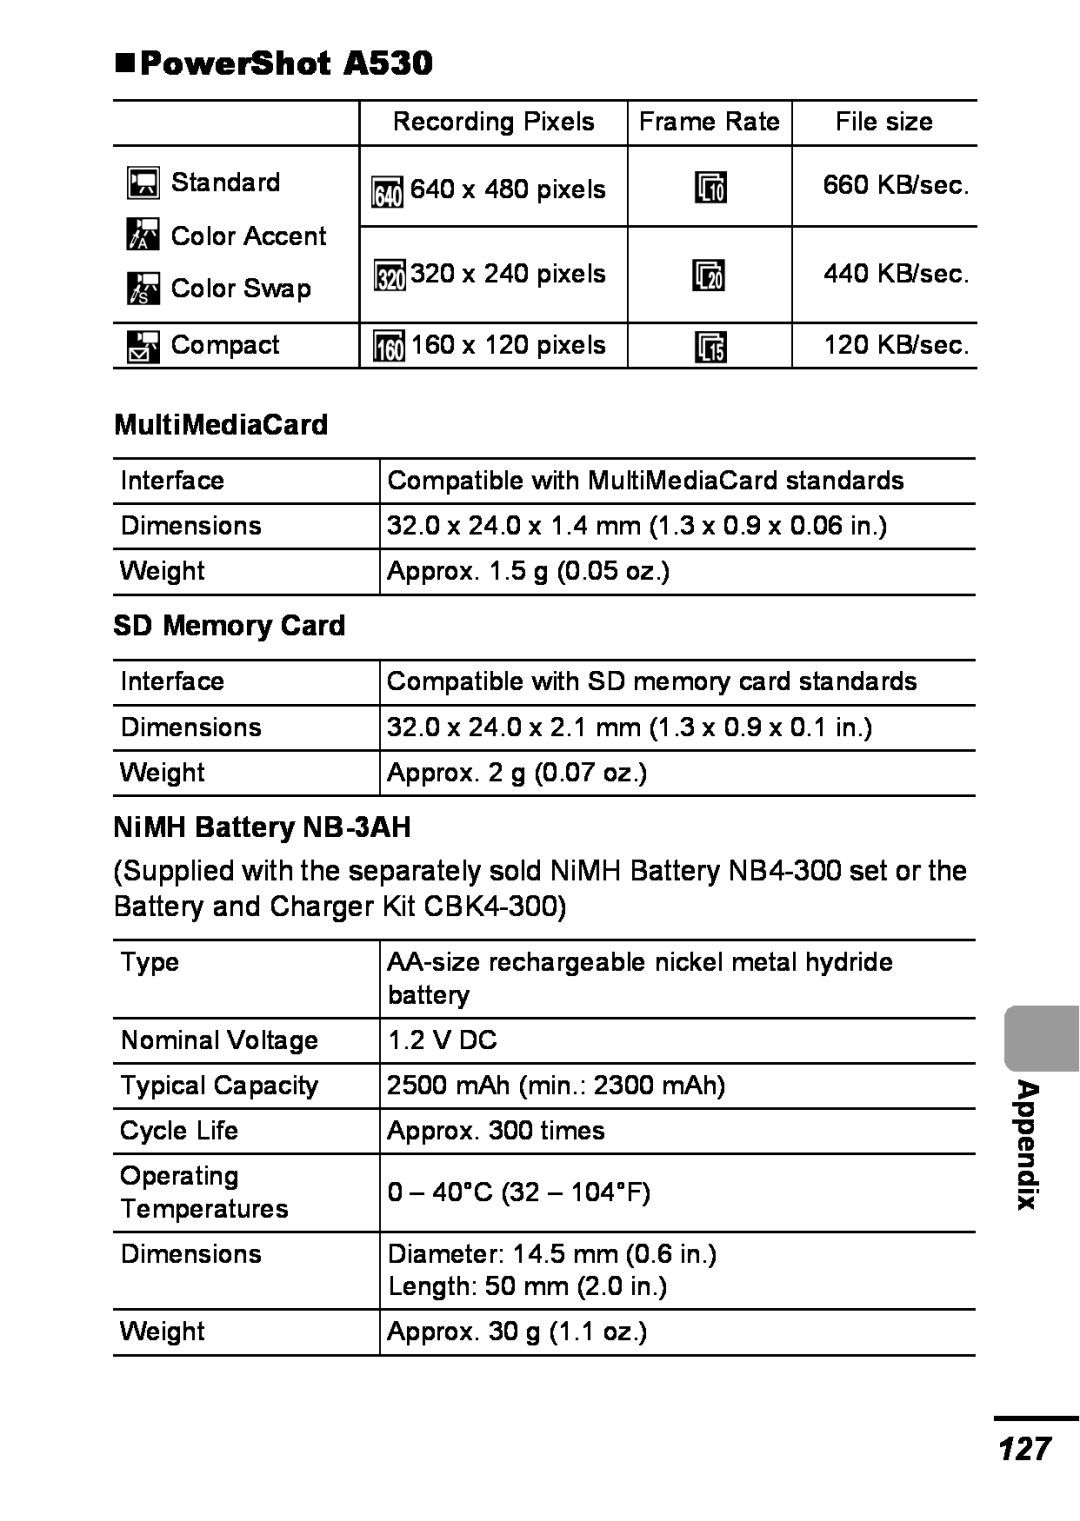 Canon A540 appendix MultiMediaCard, NiMH Battery NB-3AH, #PowerShot A530, SD Memory Card 